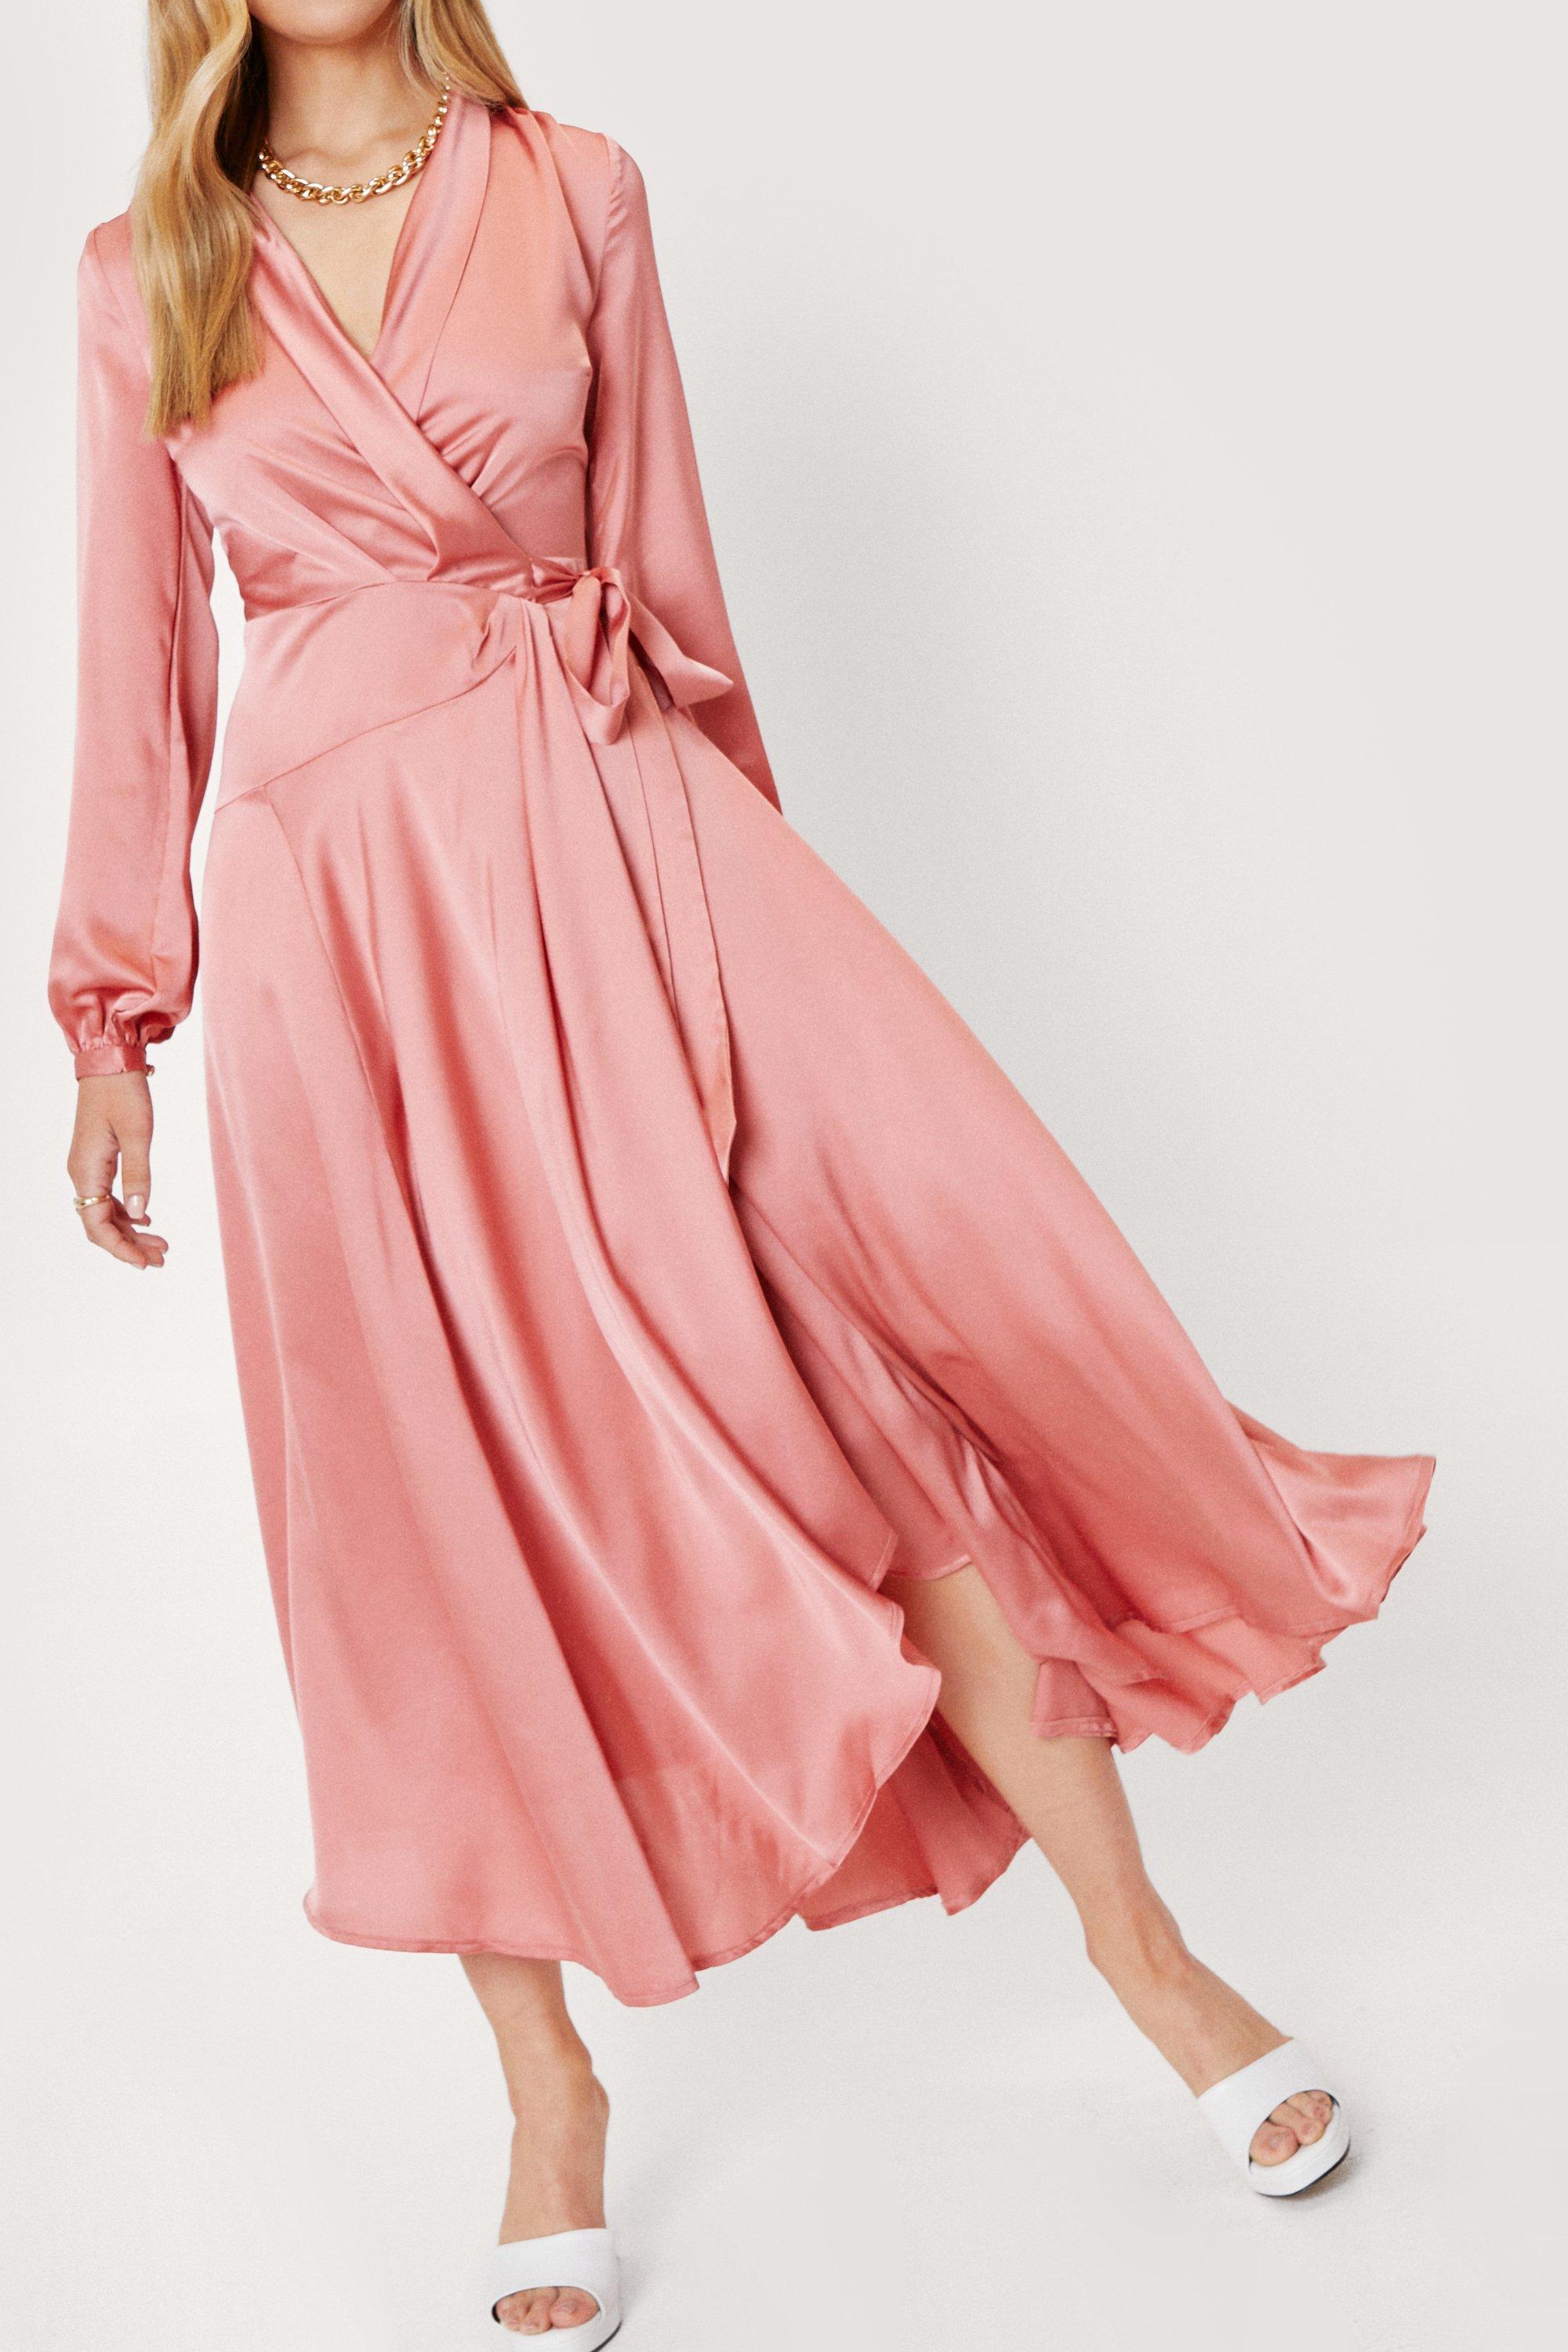 pink satin maxi dress Big sale - OFF 78%